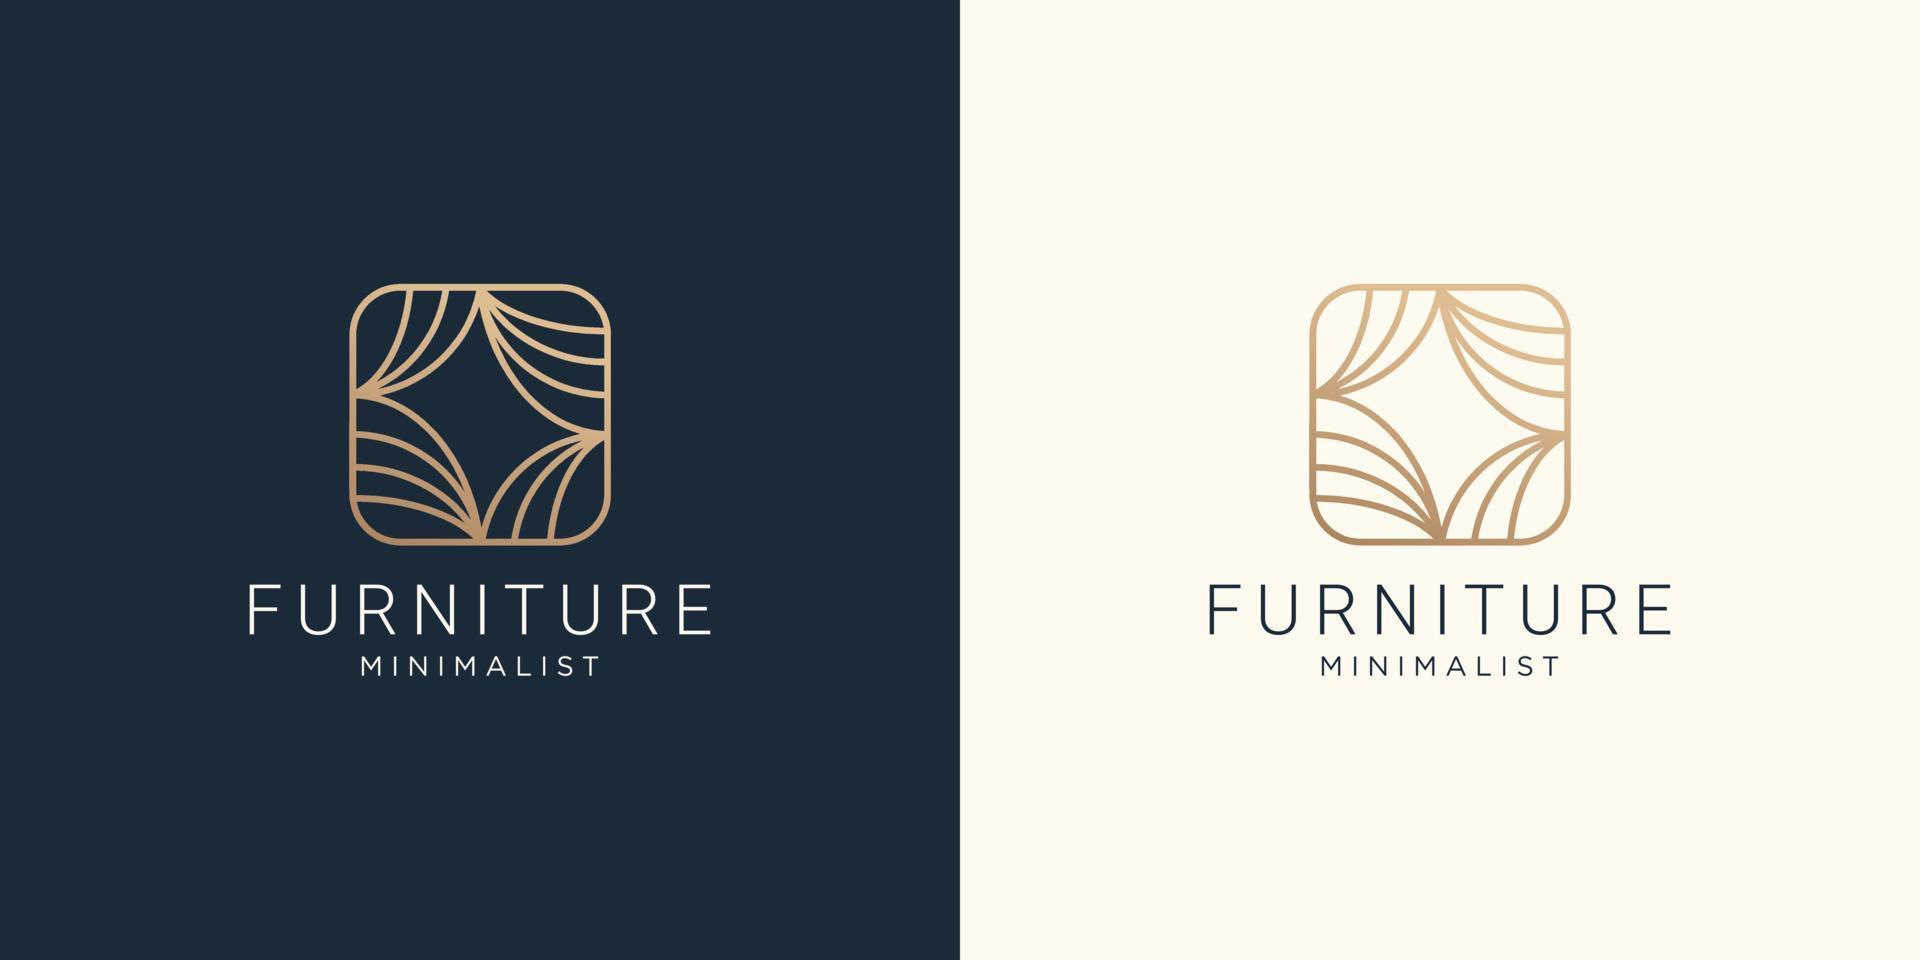 creative furniture minimalist Interior logo line art design template. Premium Vector